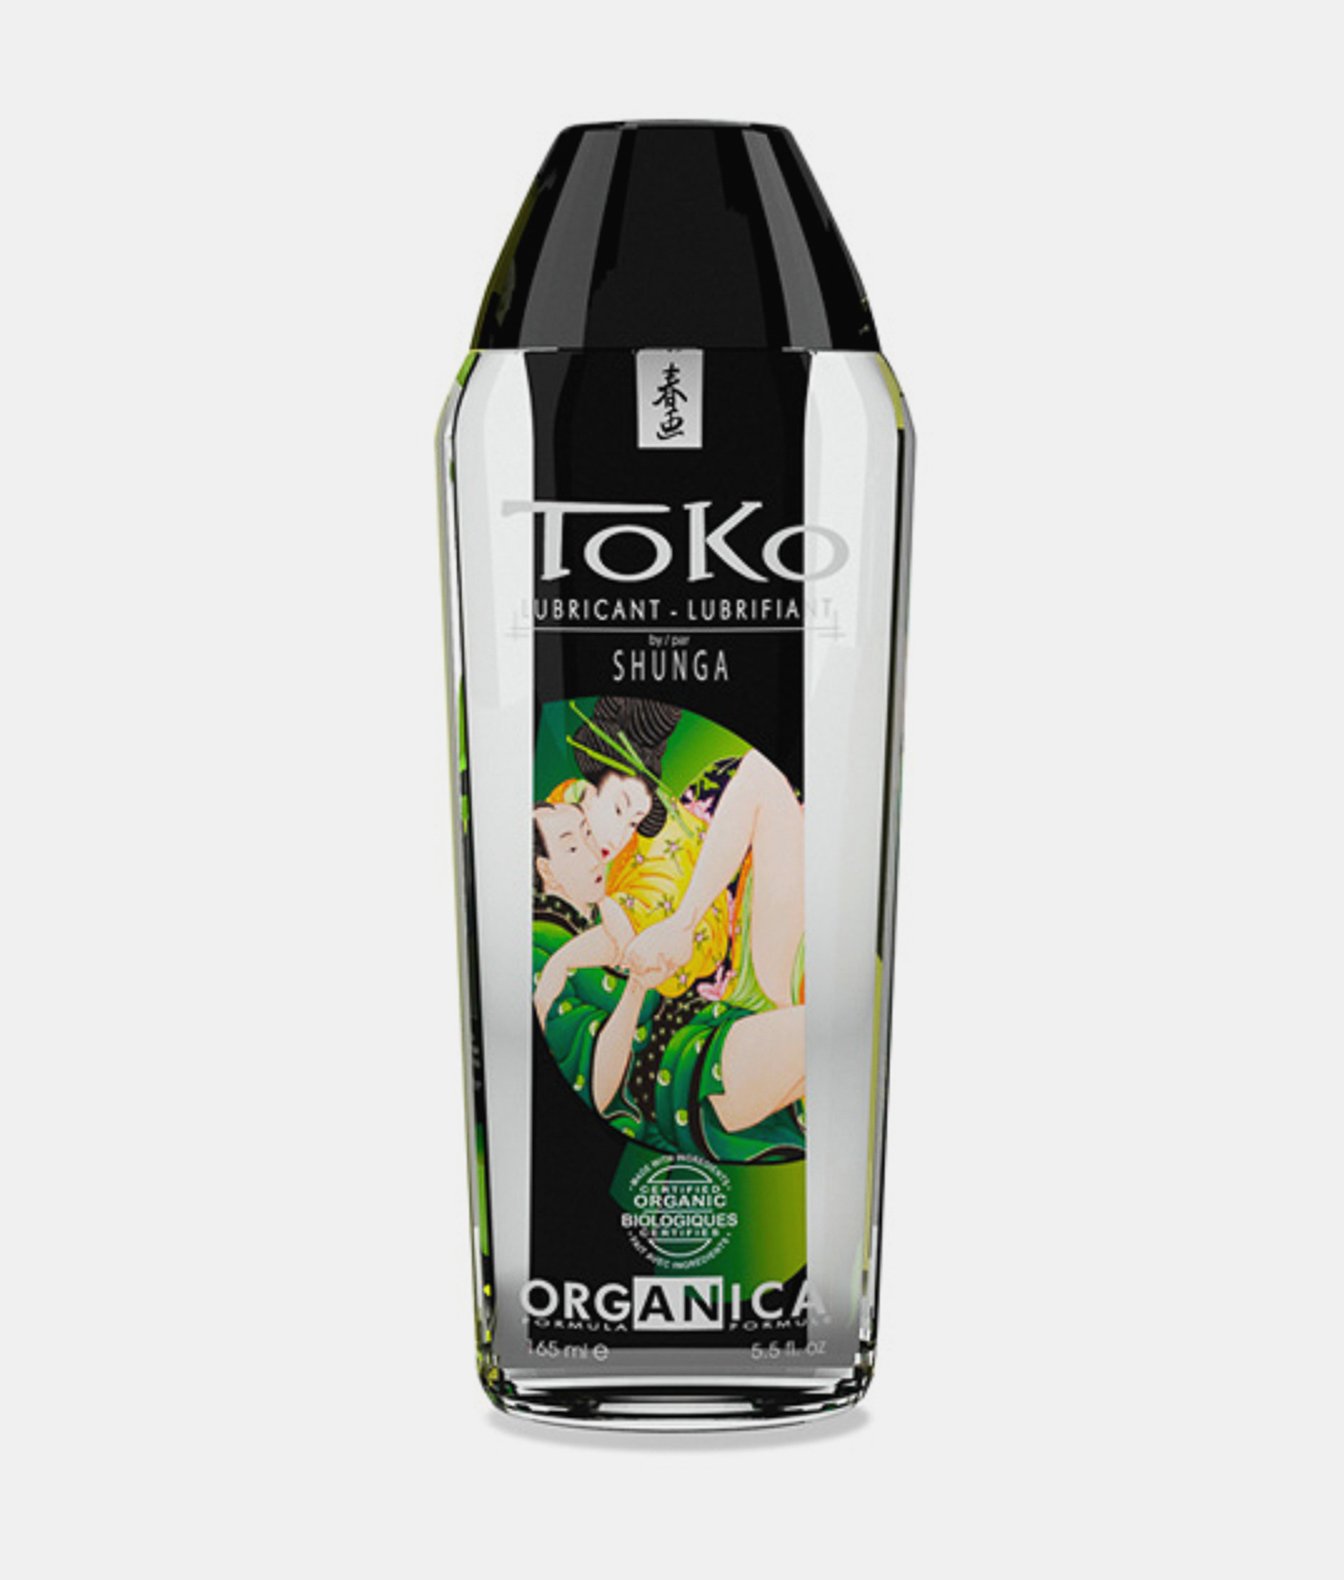 Shunga Toko organiczny lubrykant na bazie wody